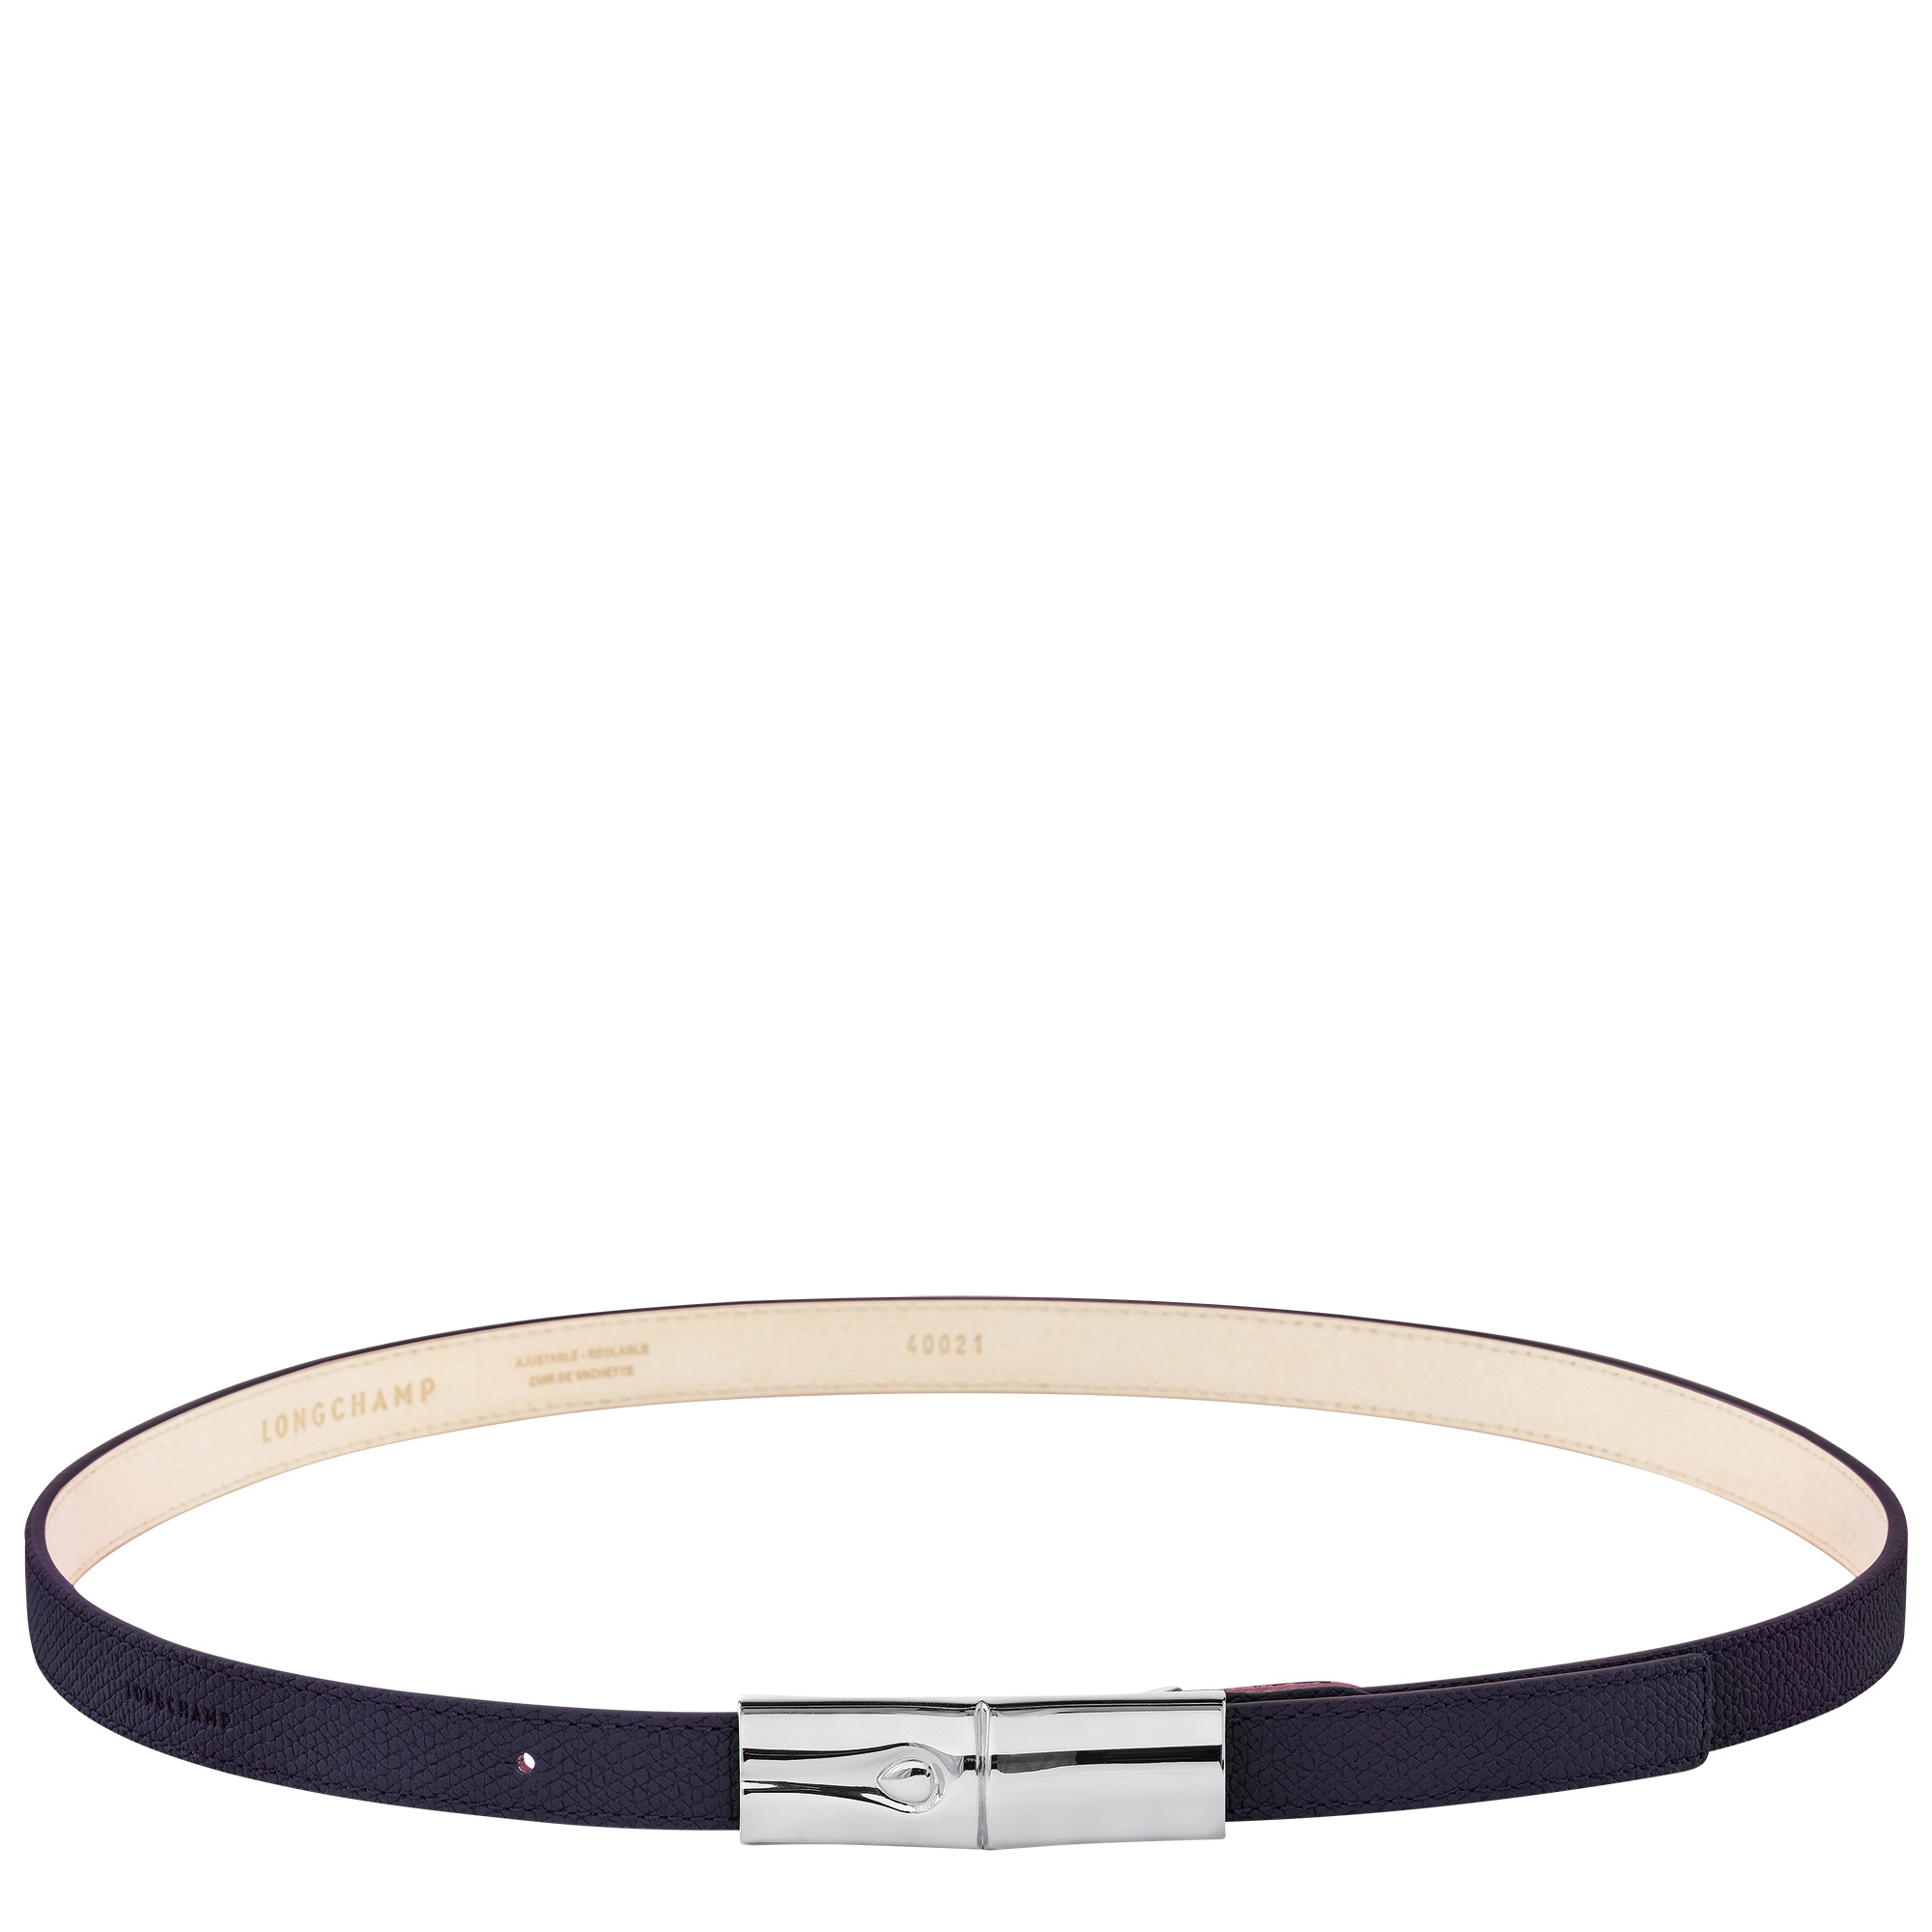 Roseau Ladies' belt Bilberry - Leather - 1